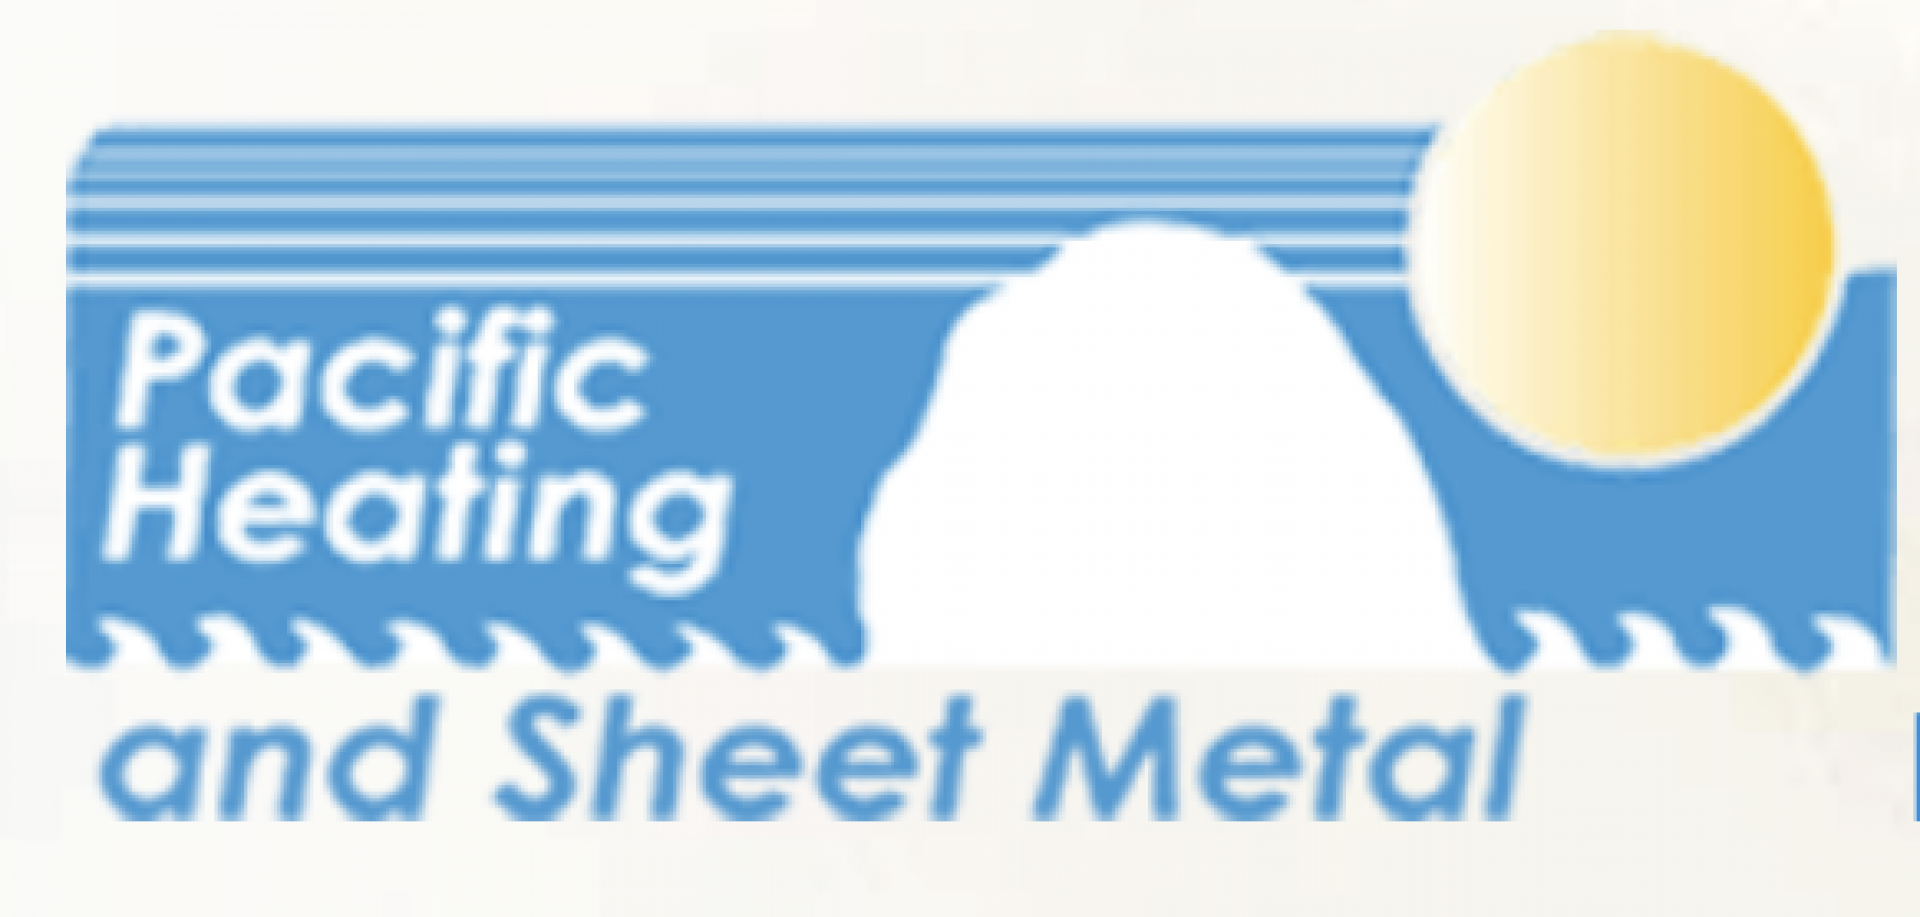 Pacific Heating and Sheet Metal company logo